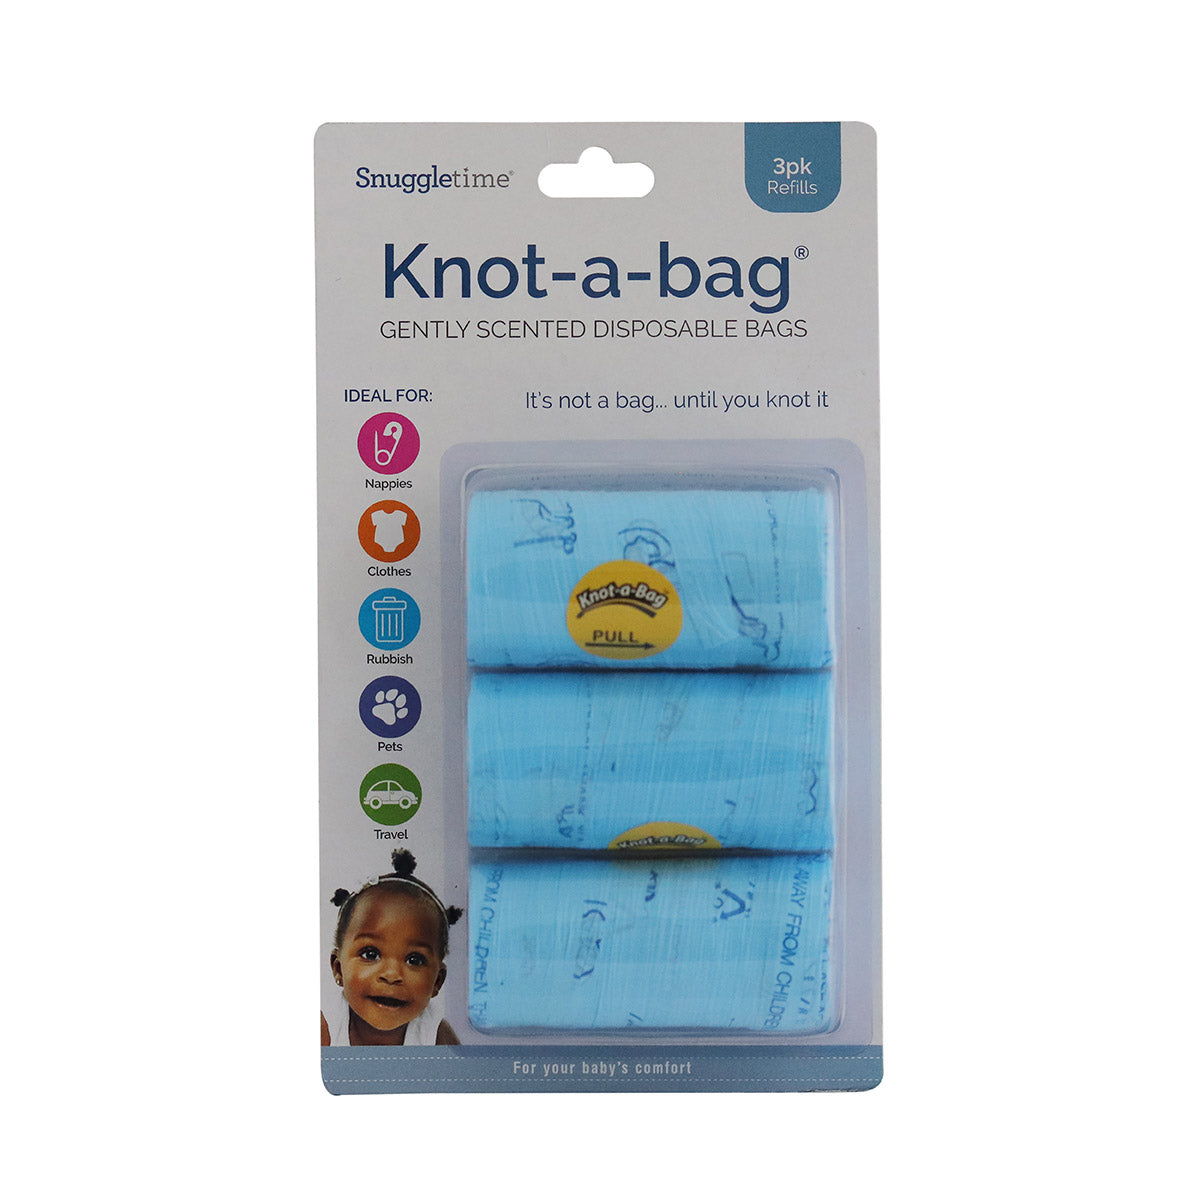 Snuggletime Knot-a-bag - 3 Pack Refills